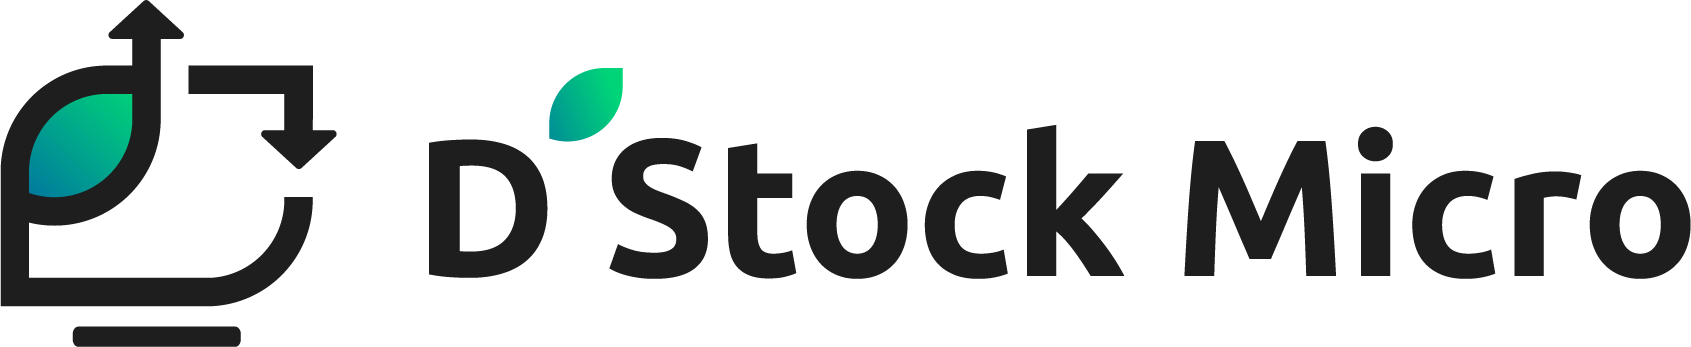 D Stock Micro